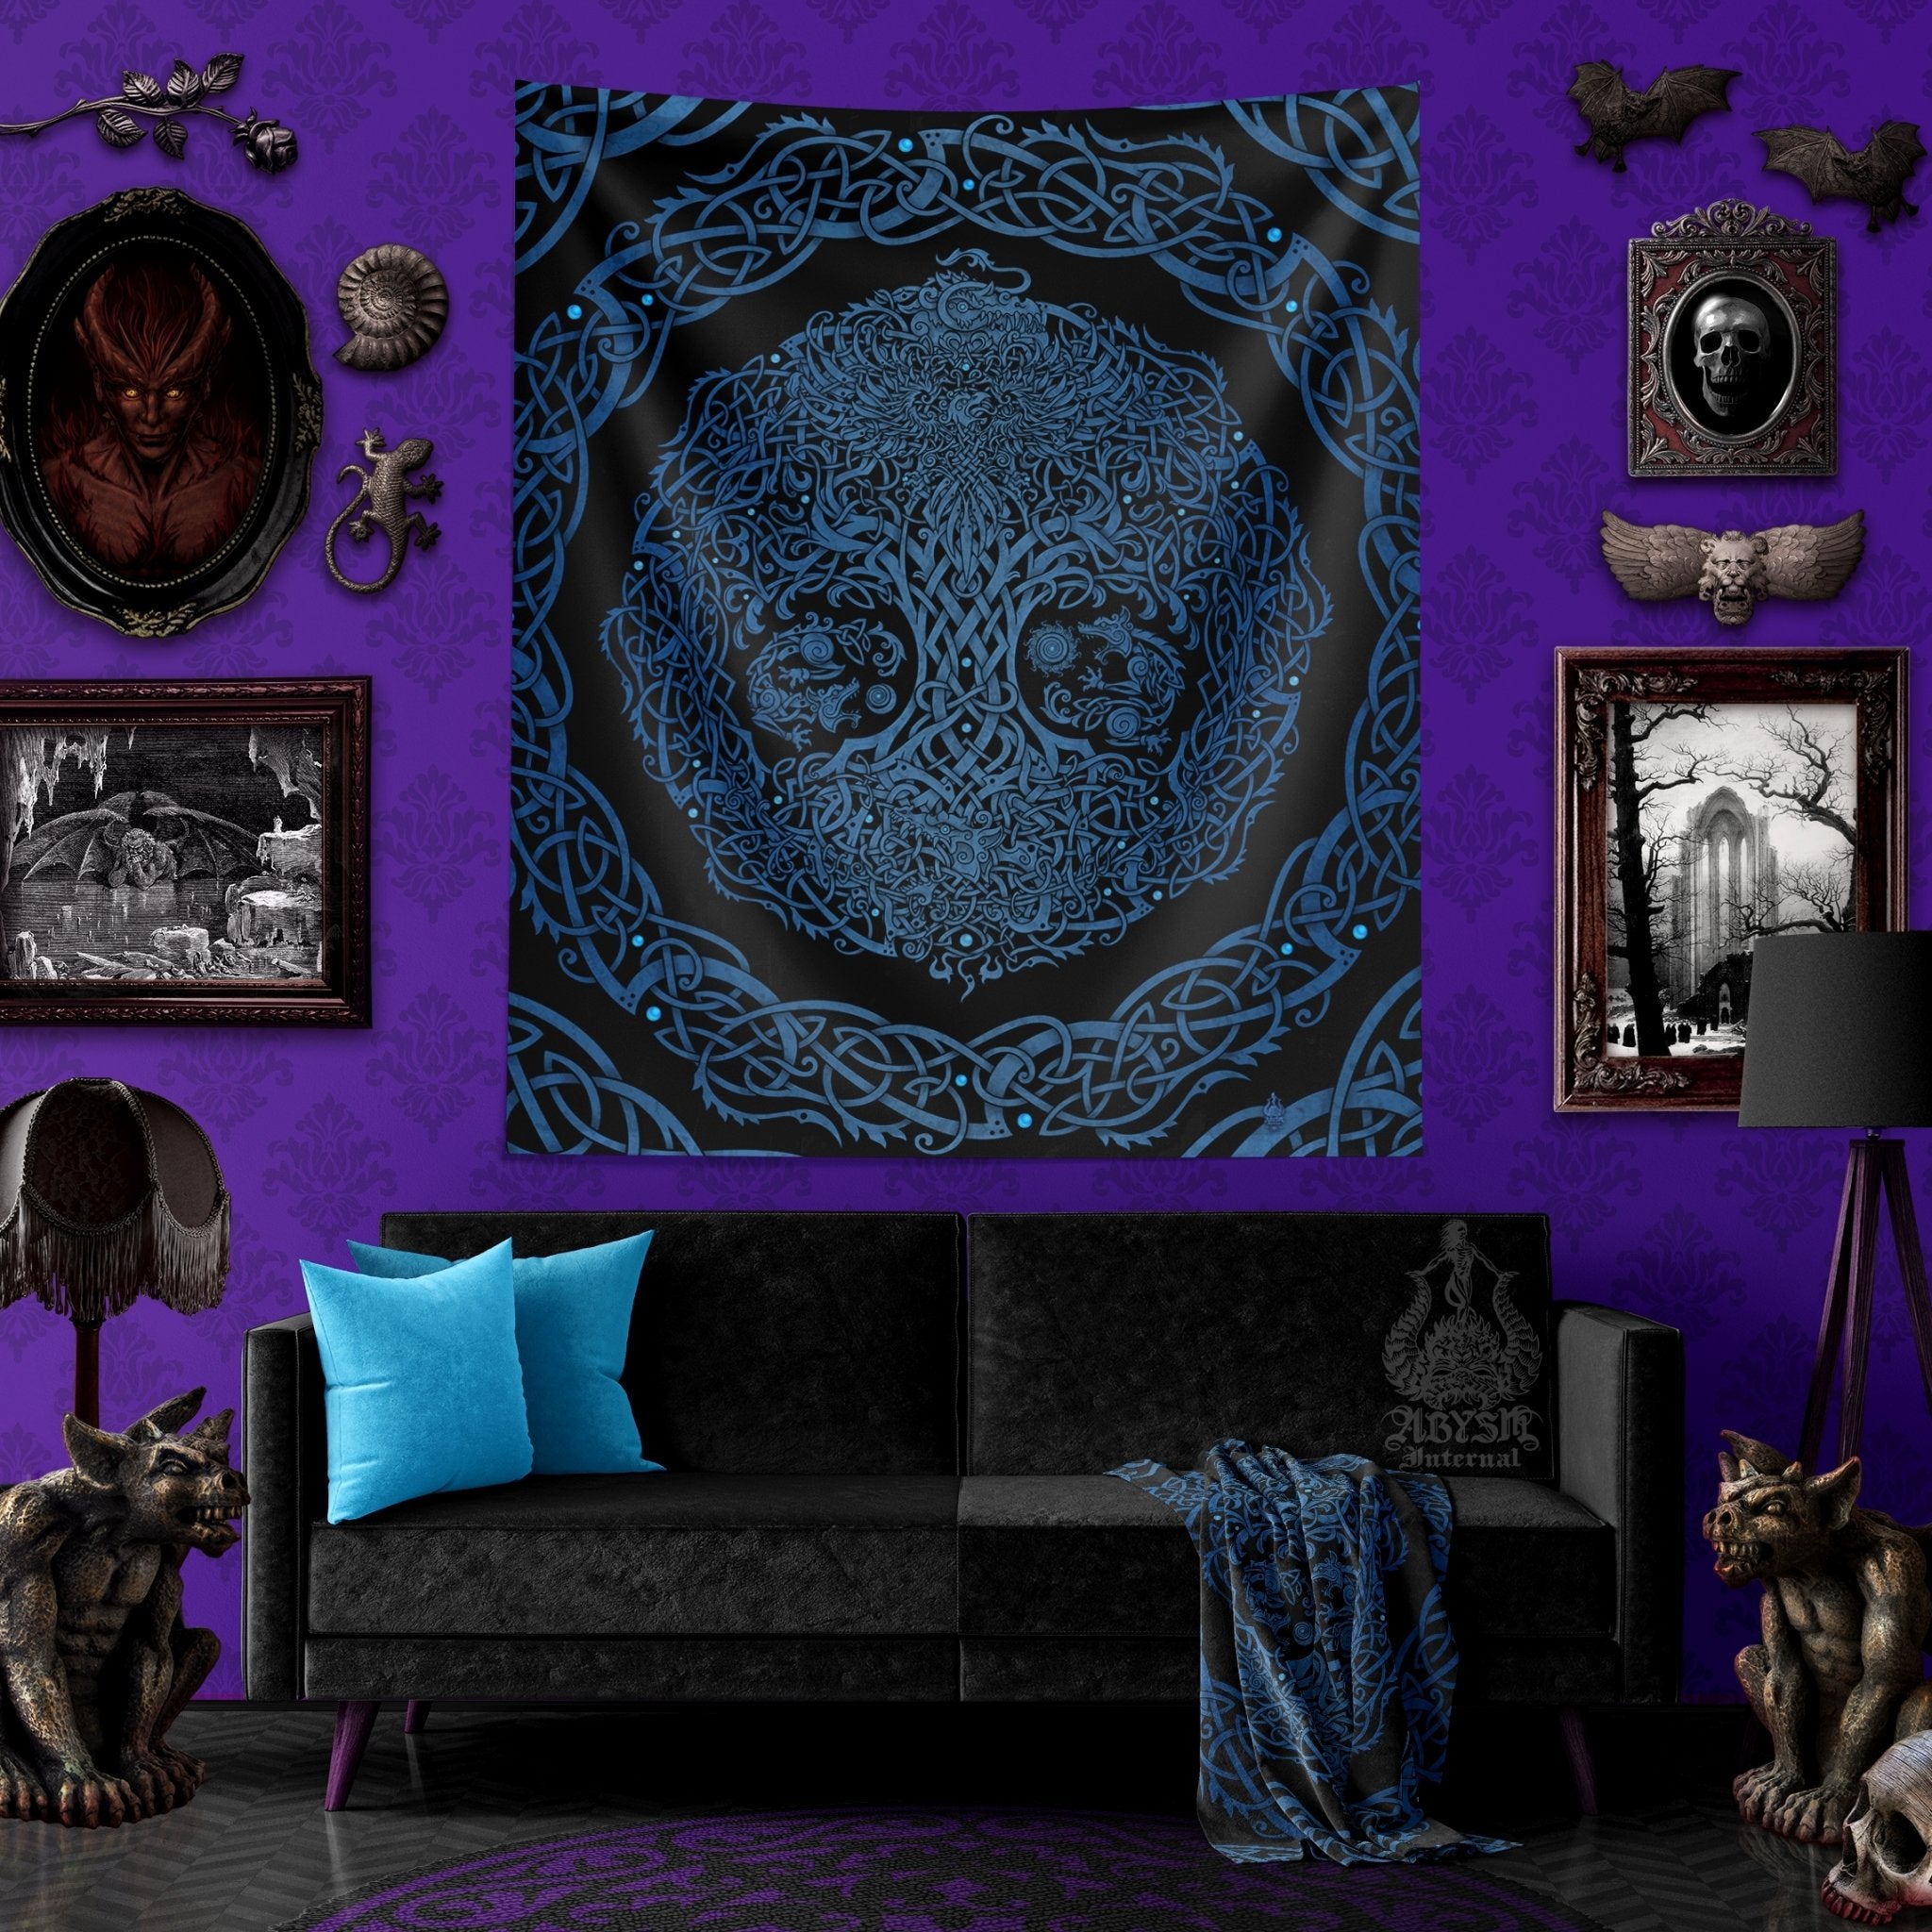 Viking Tapestry, Yggdrasil Wall Hanging, Norse Home Decor, Pagan Art Print, Nordic Tree of Life - Black & Blue - Abysm Internal